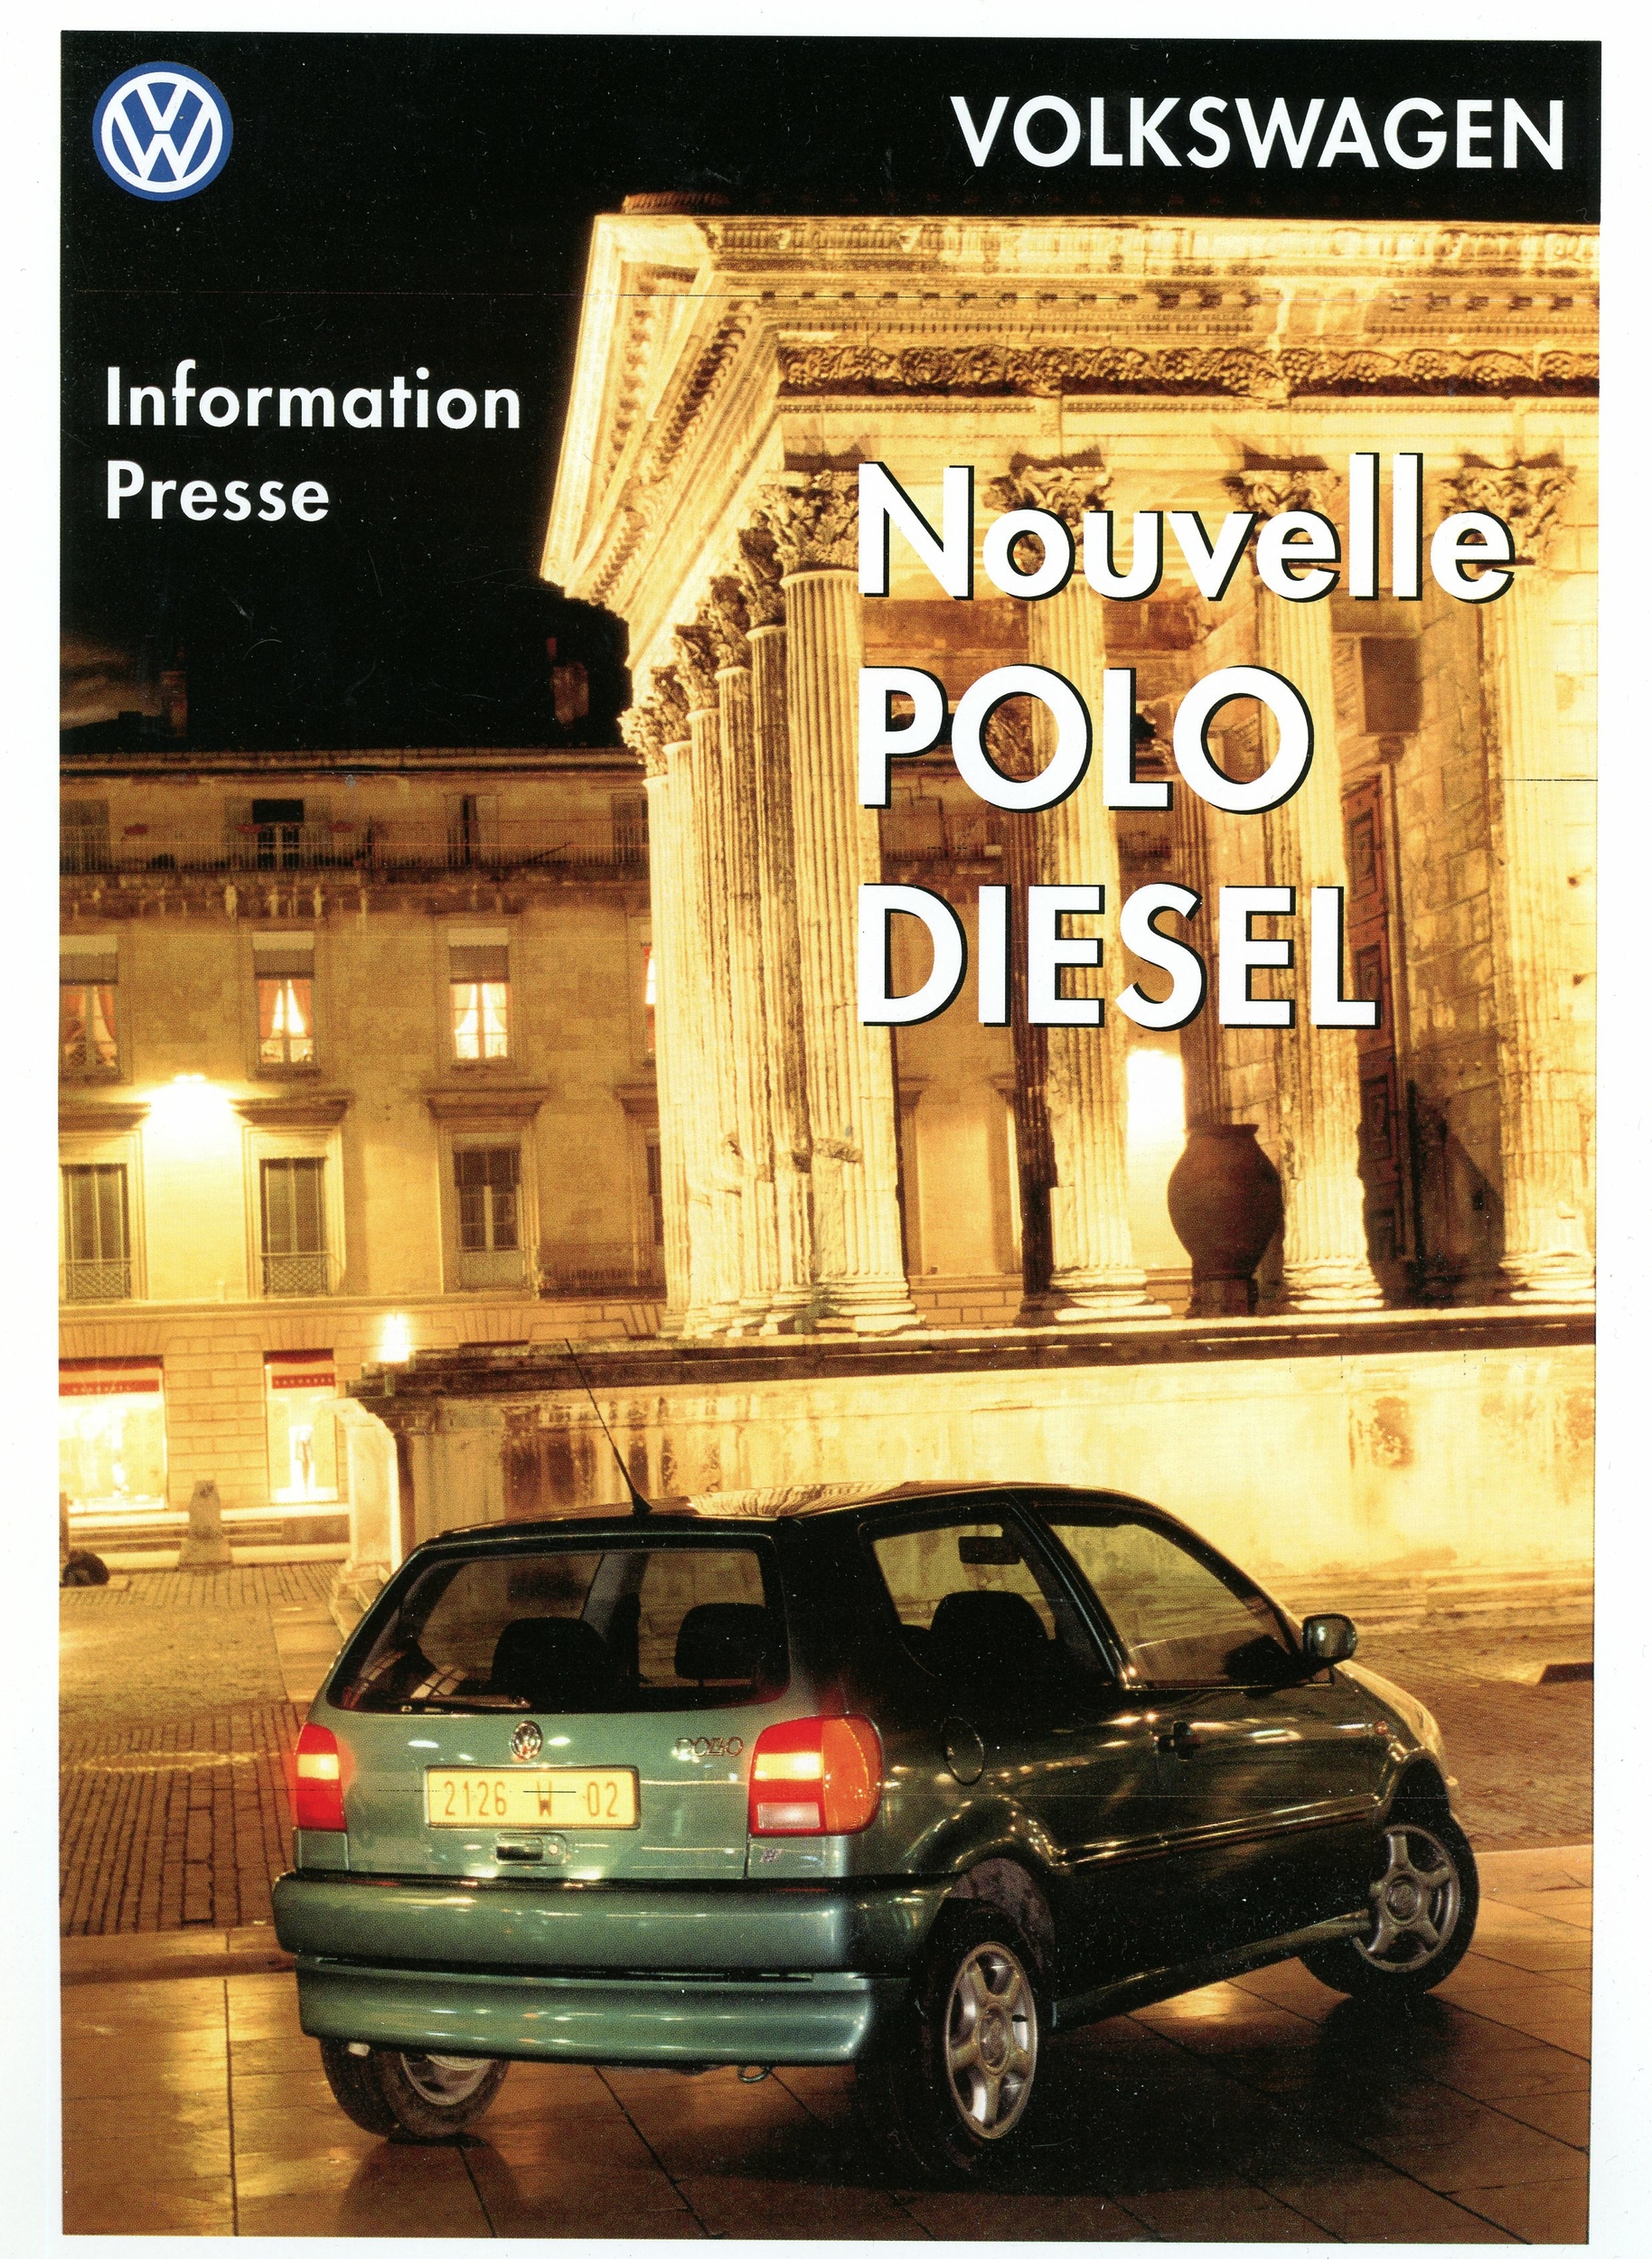 VOLKSWAGEN NOUVELLE POLO DIESEL - 1996 - INFORMATION PRESSE